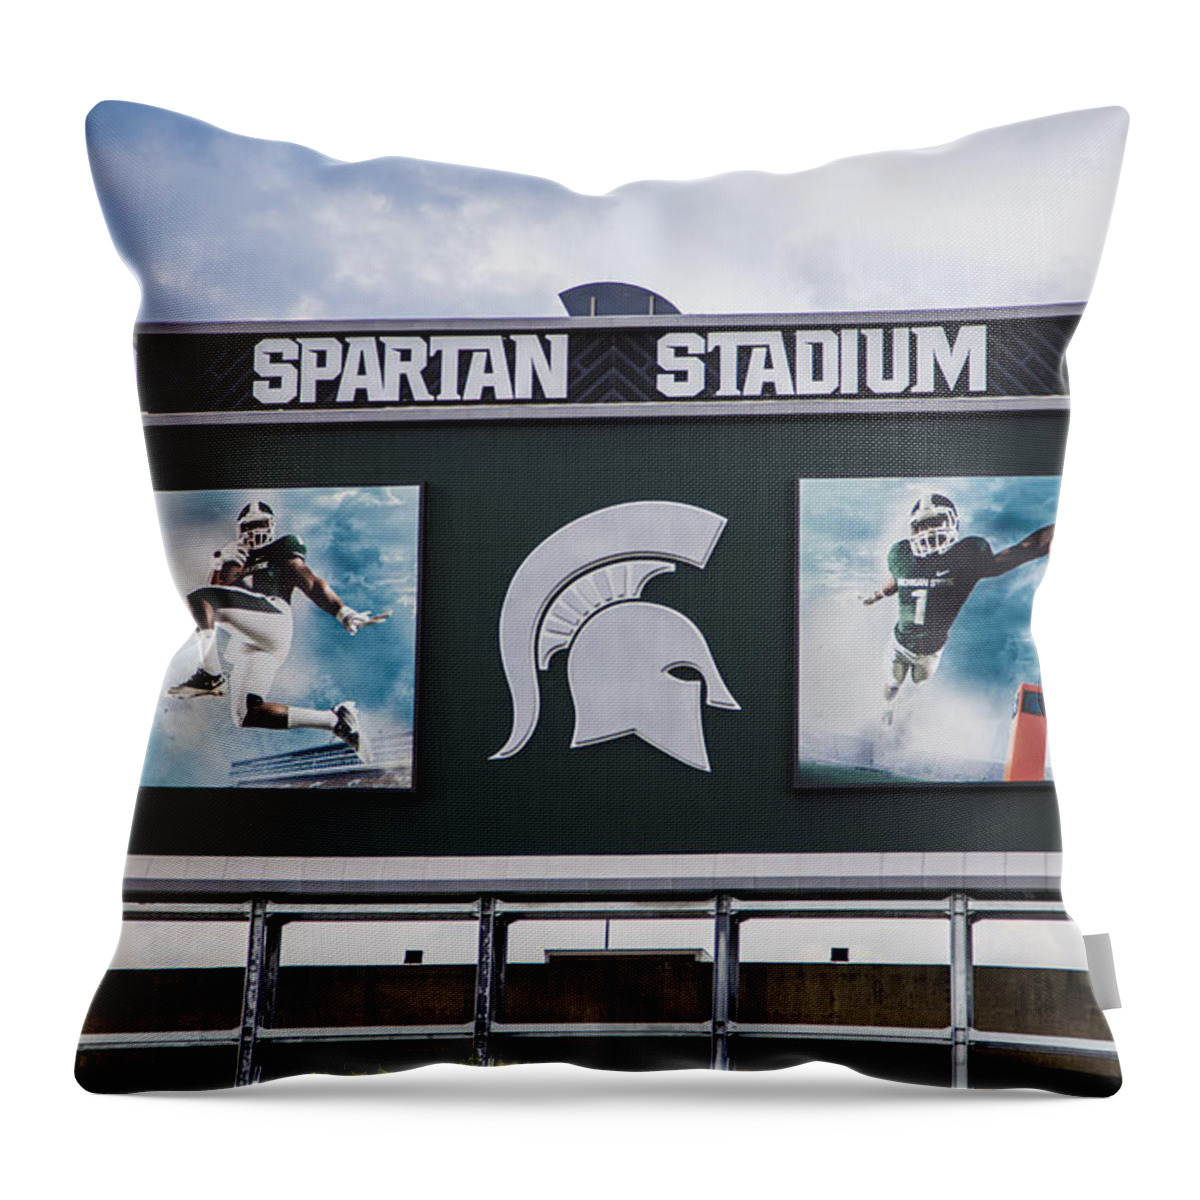 Michigan State Throw Pillow featuring the photograph Spartan Stadium Scoreboard by John McGraw